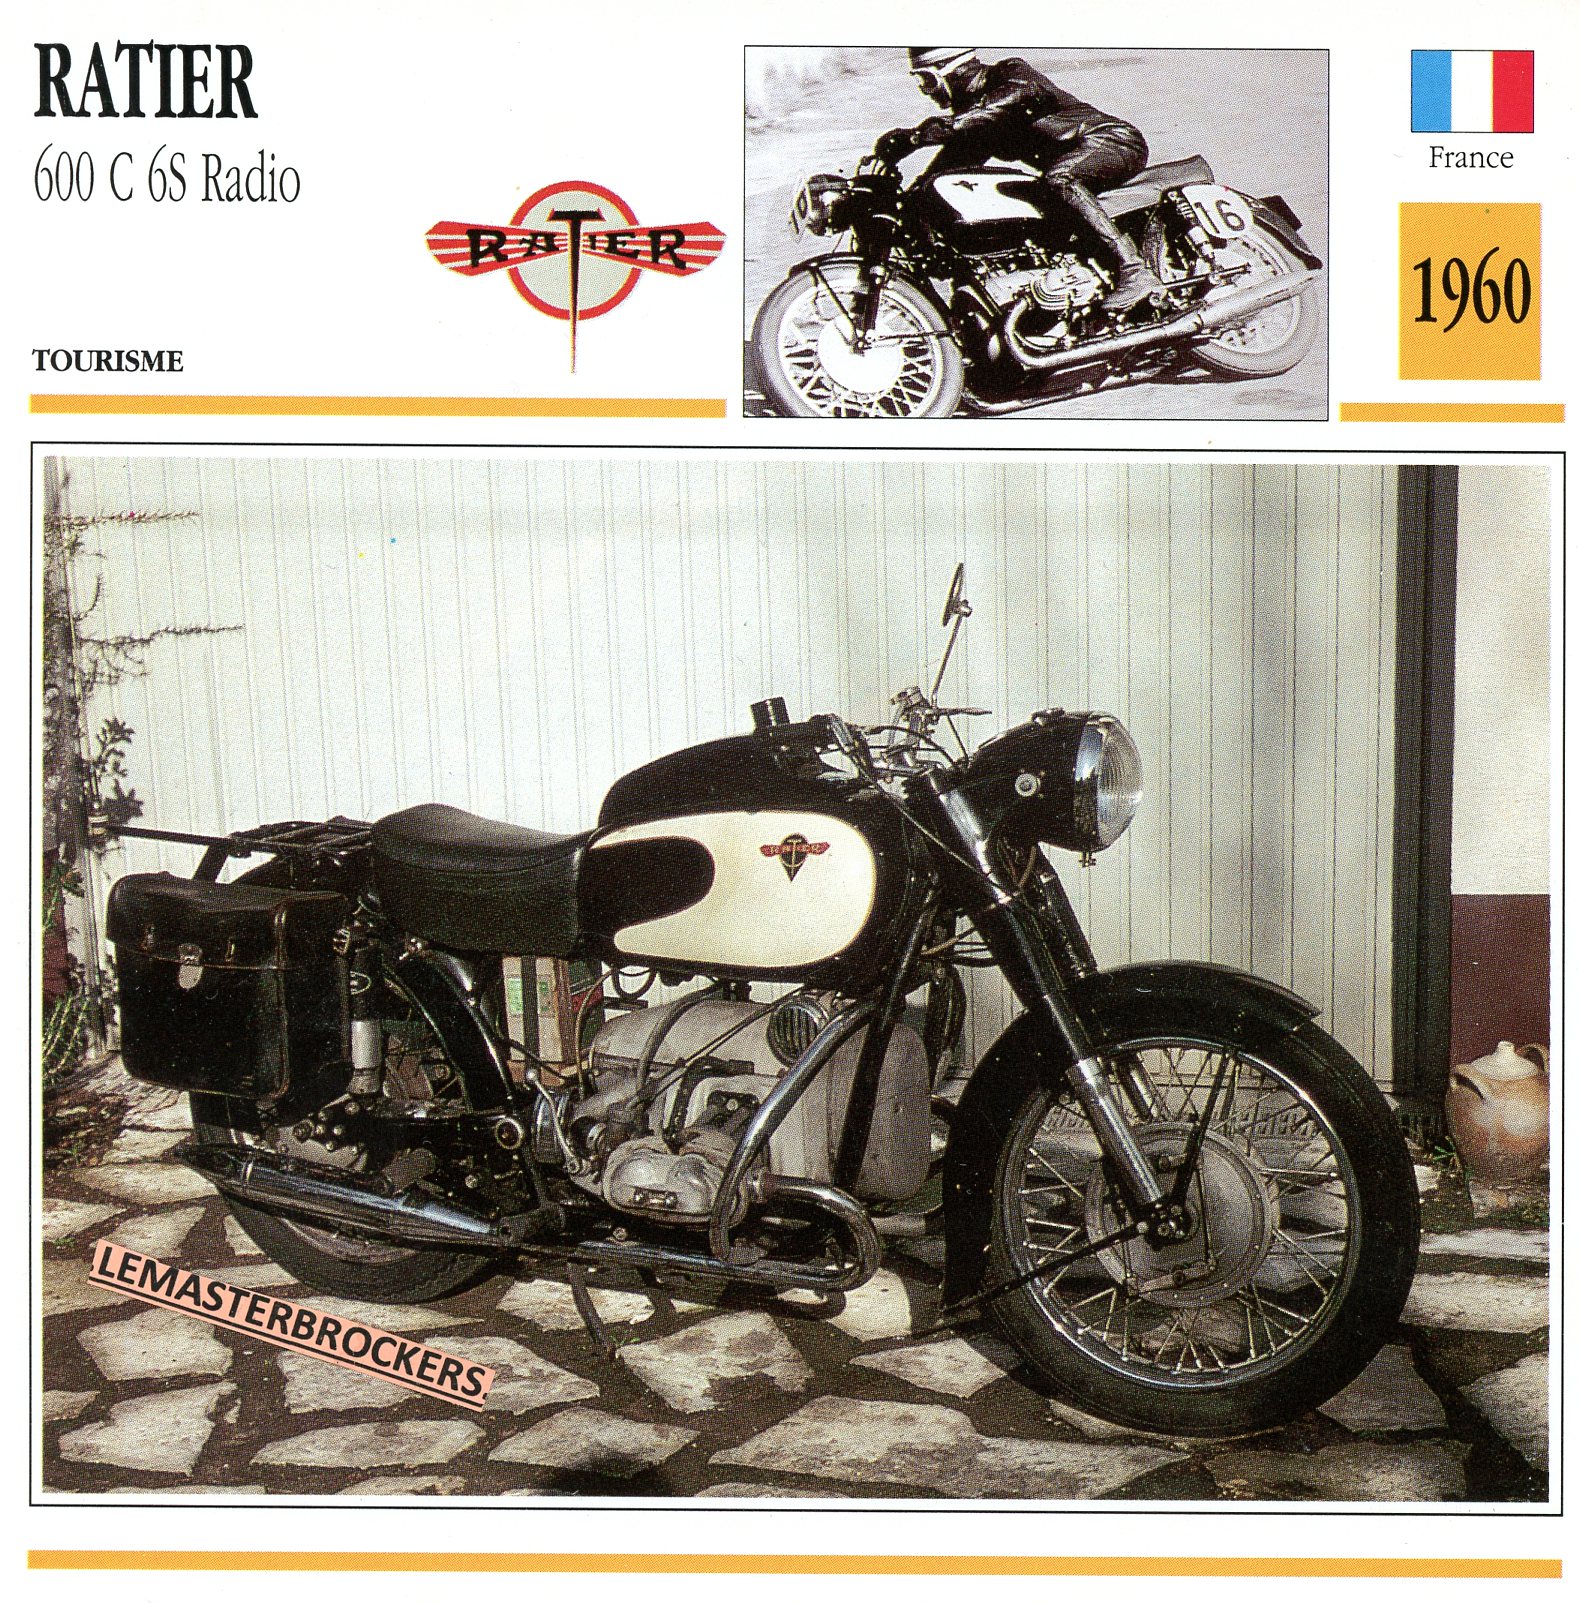 RATIER-600CC-6S-RADIO-1960-FICHE-MOTO-ATLAS-lemasterbrockers-CARD-MOTORCYCLE